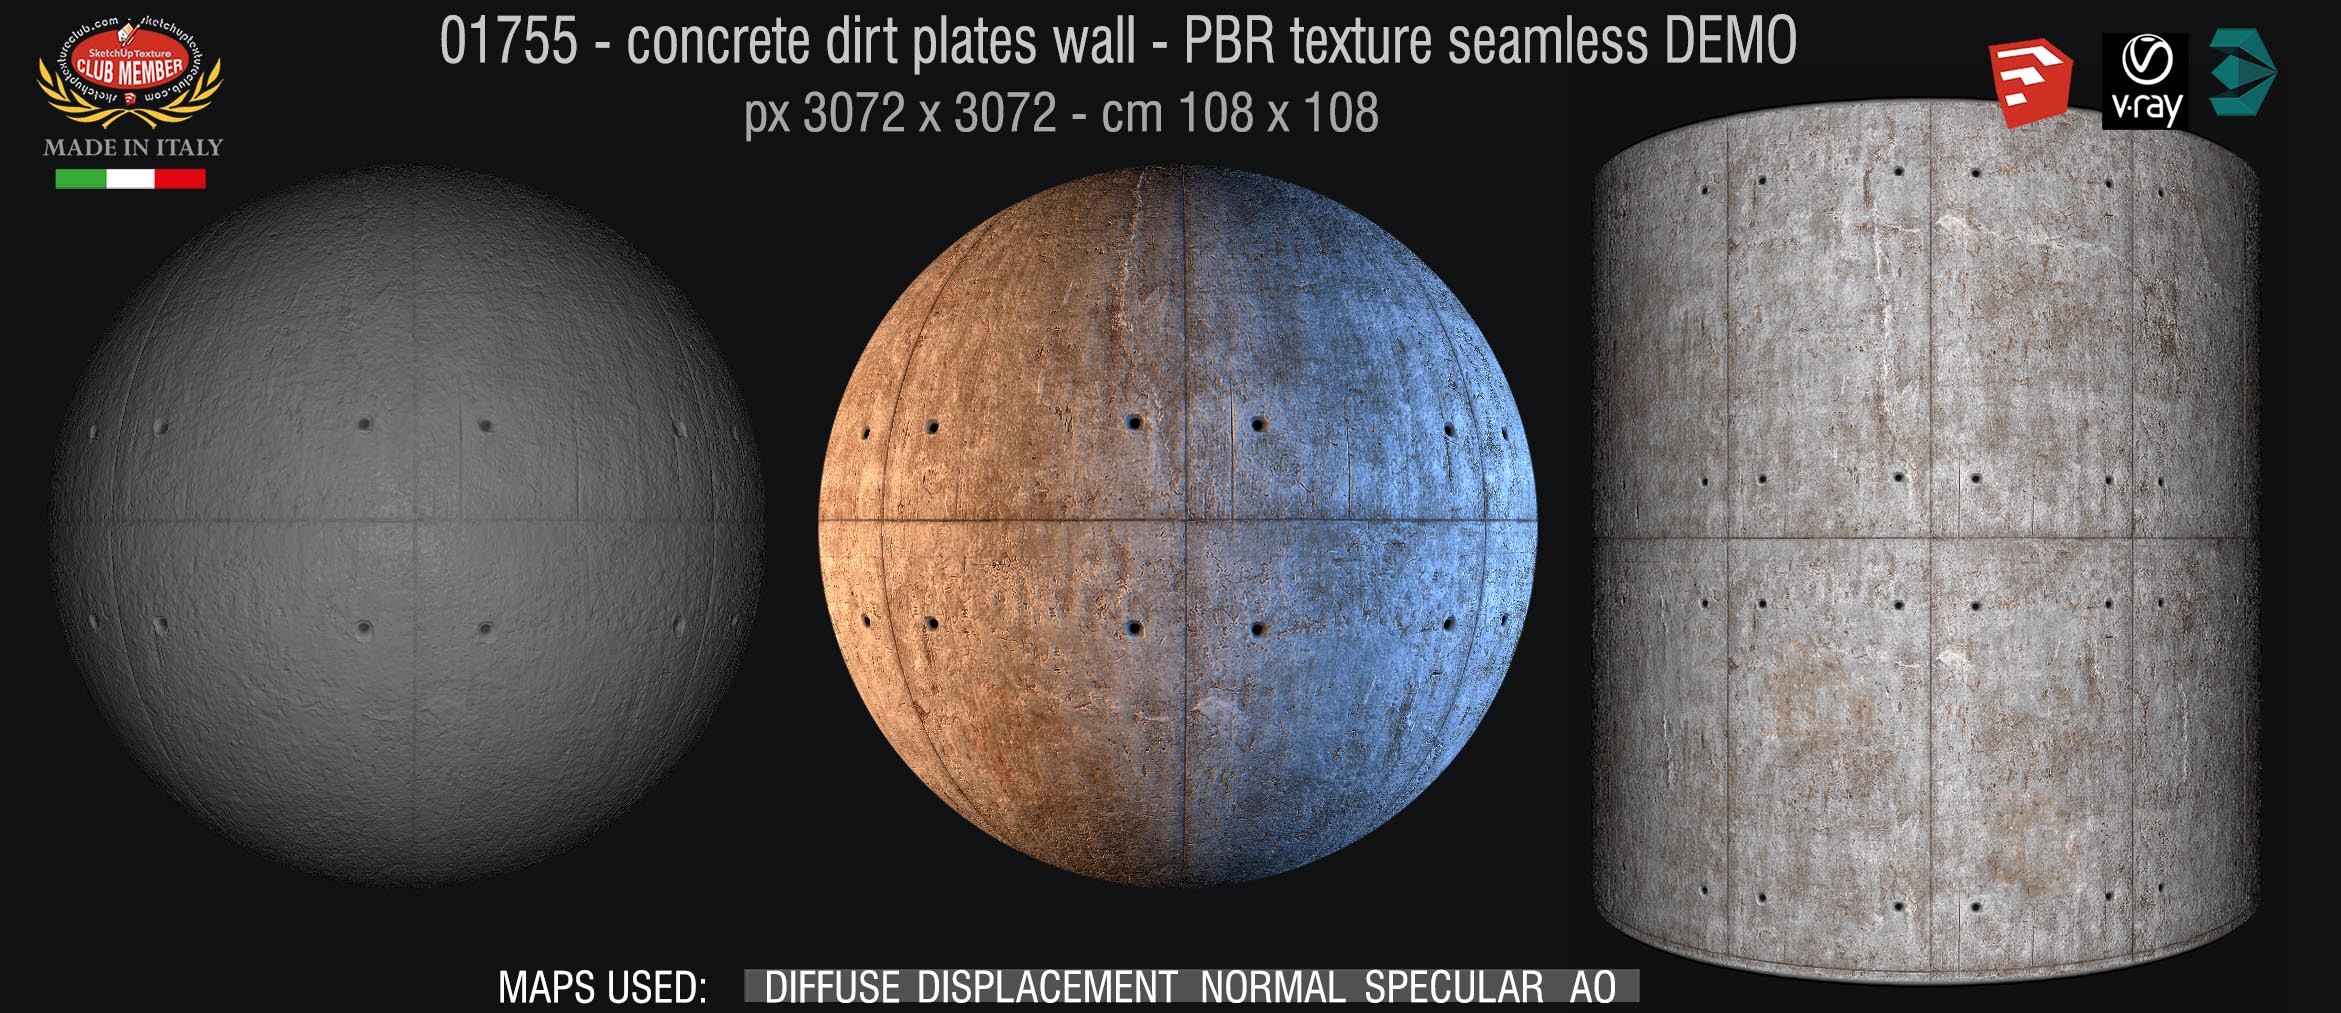 01755 concrete dirt plates wall PBR texture seamless DEMO